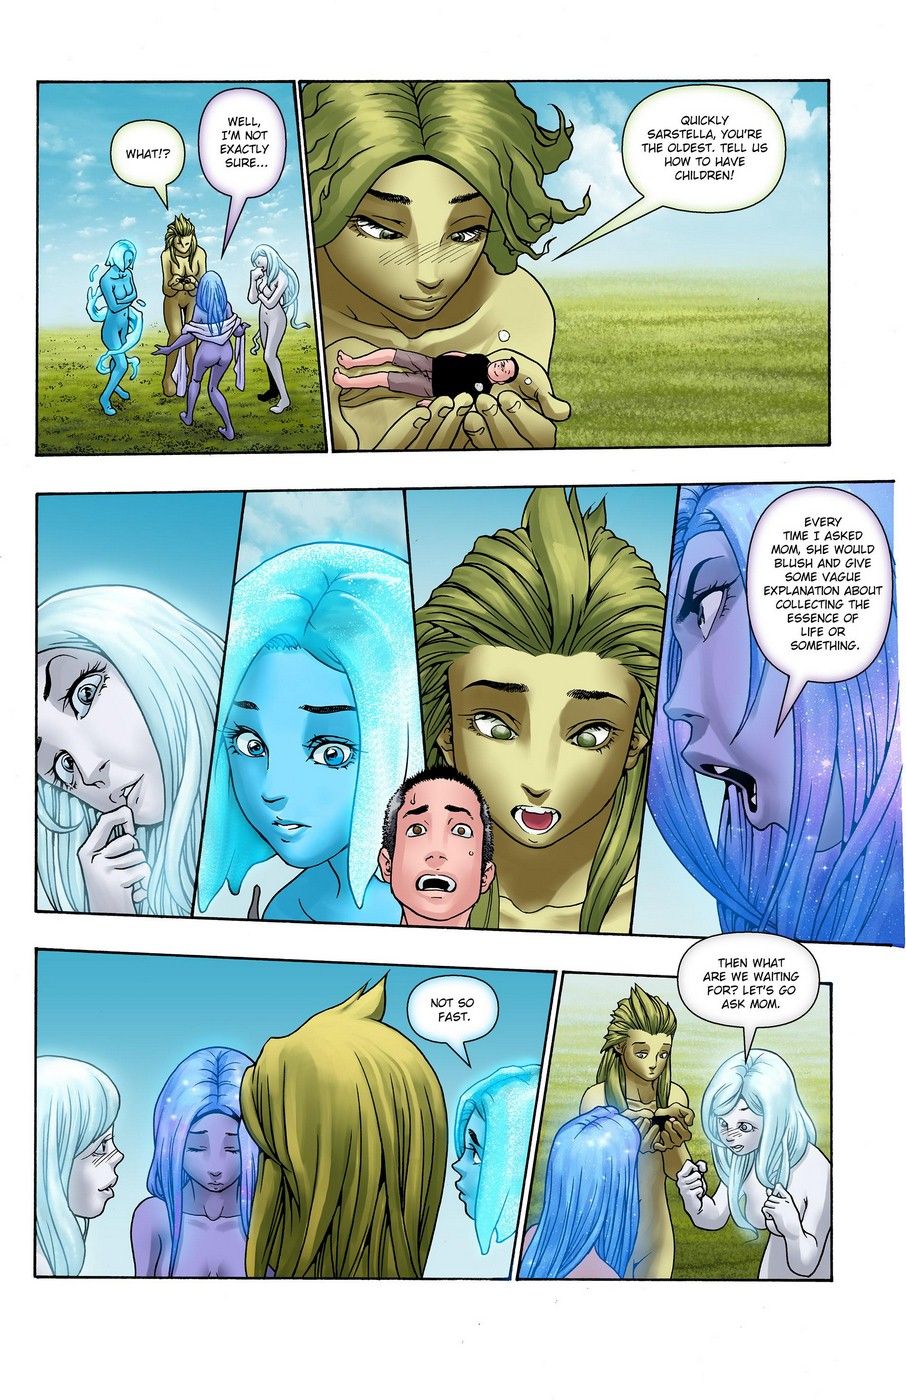 Visiting Eden - Giantness Fan page 7